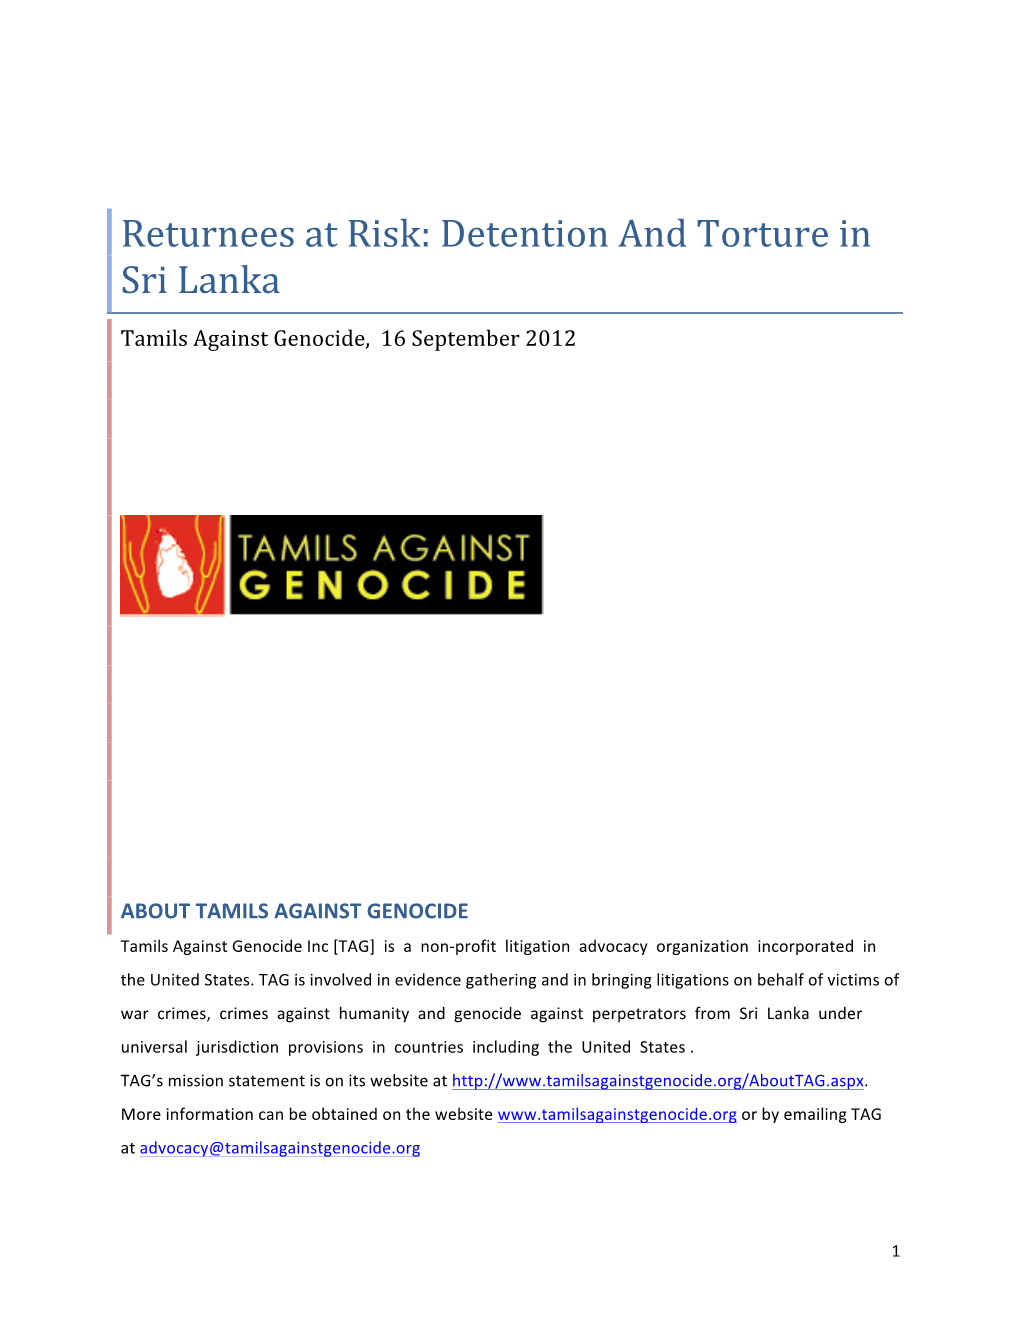 Returnees at Risk: Detention and Torture in Sri Lanka